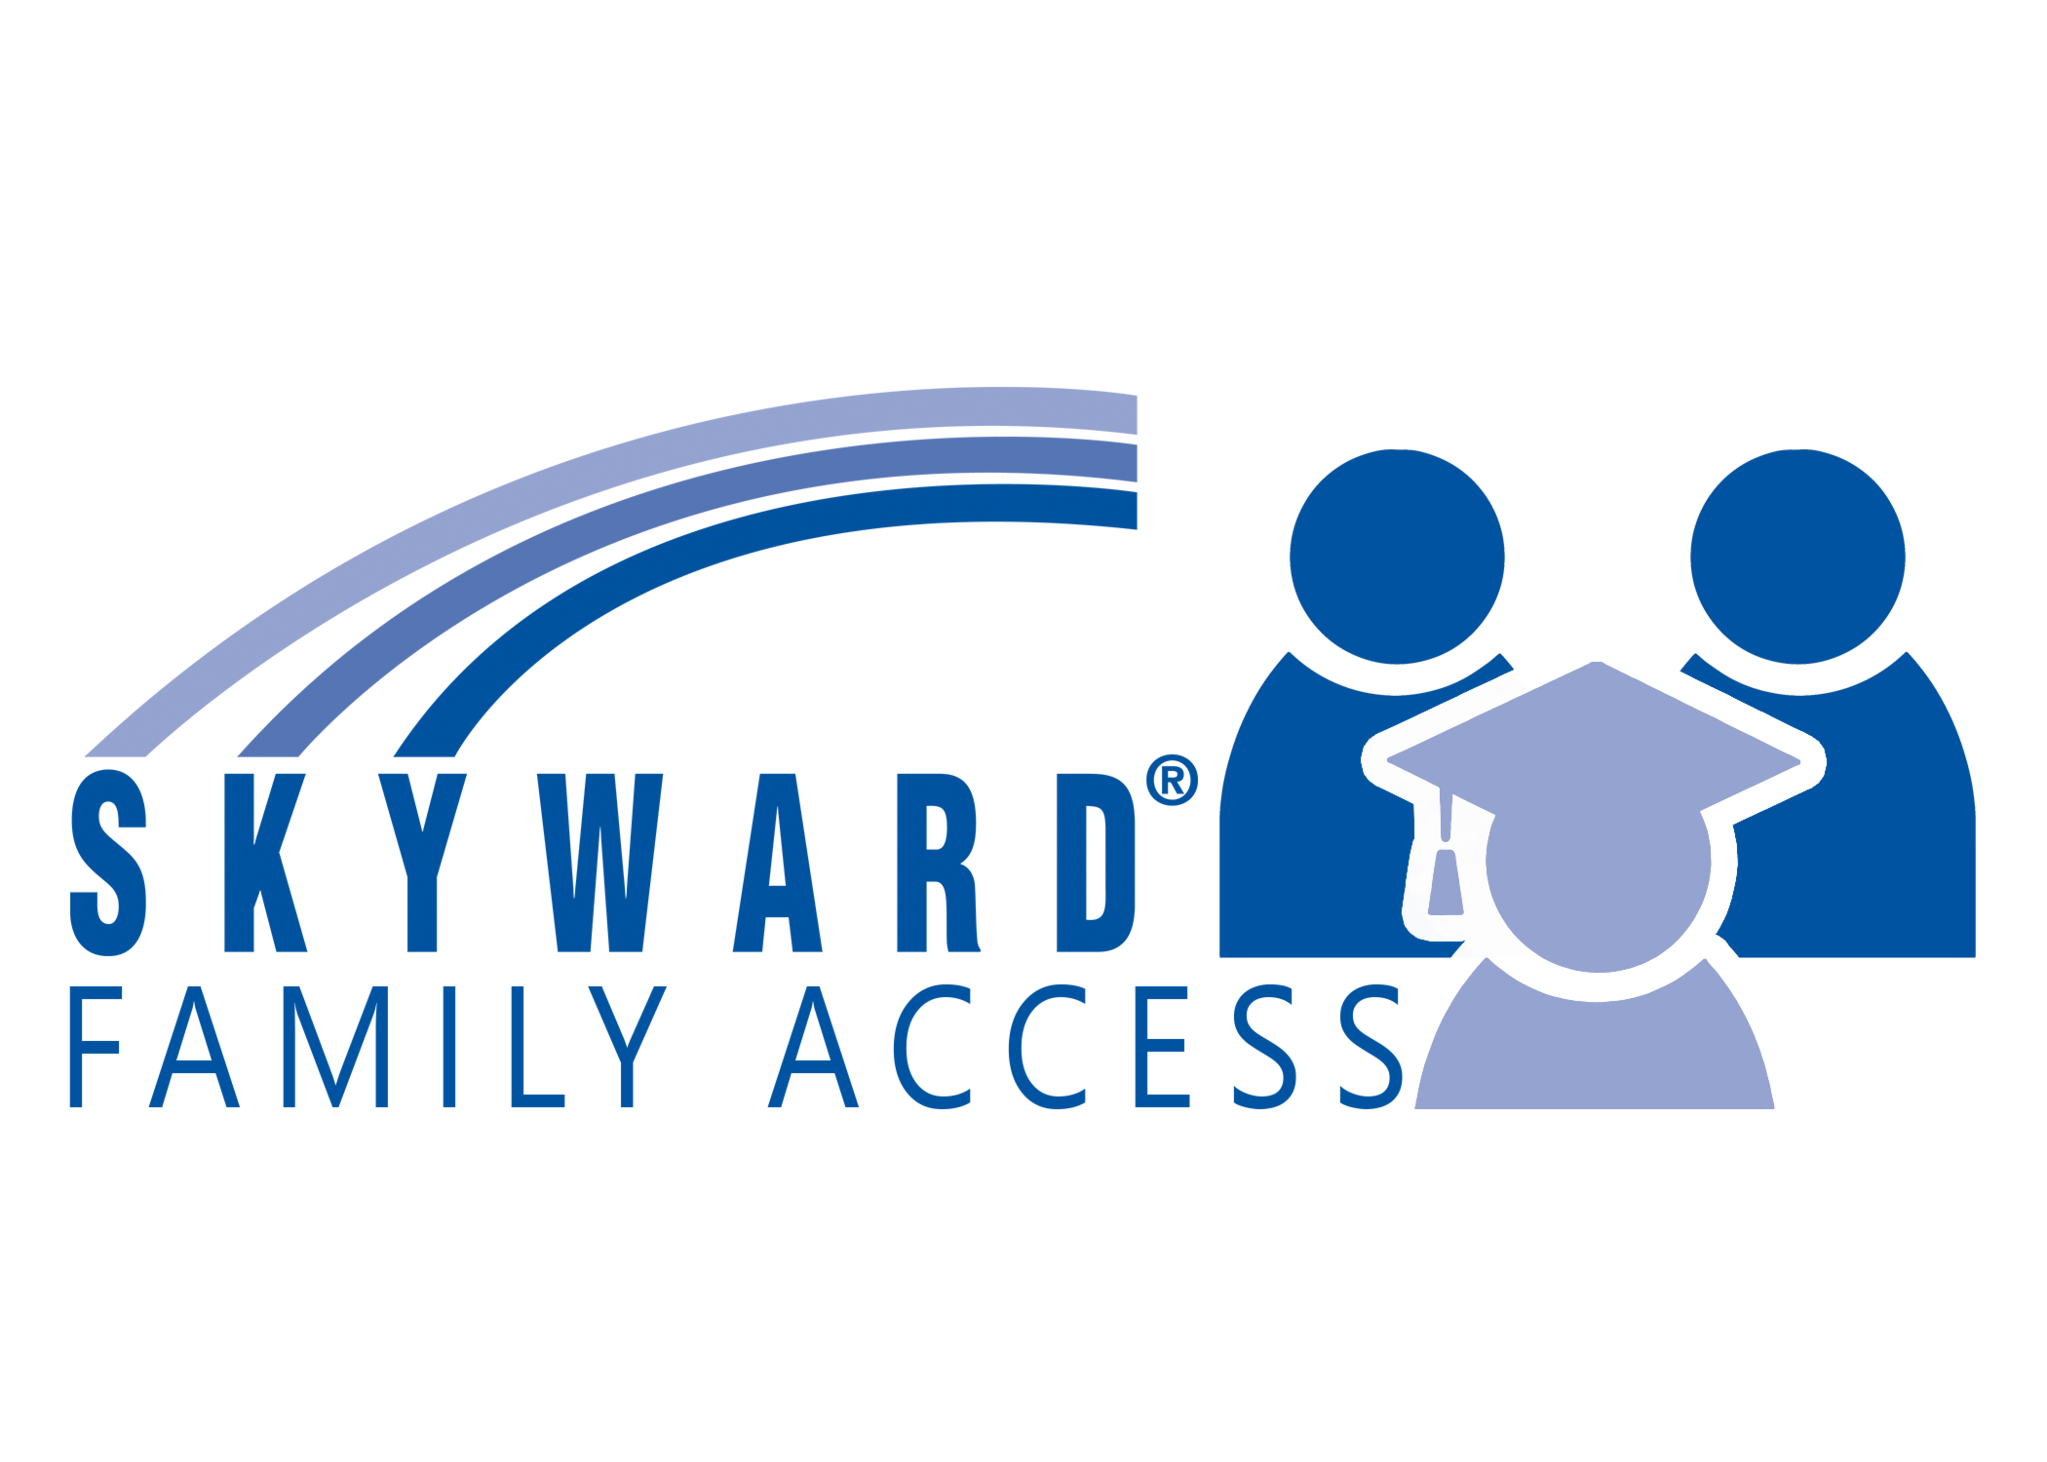 Skyward Family Access logo and link